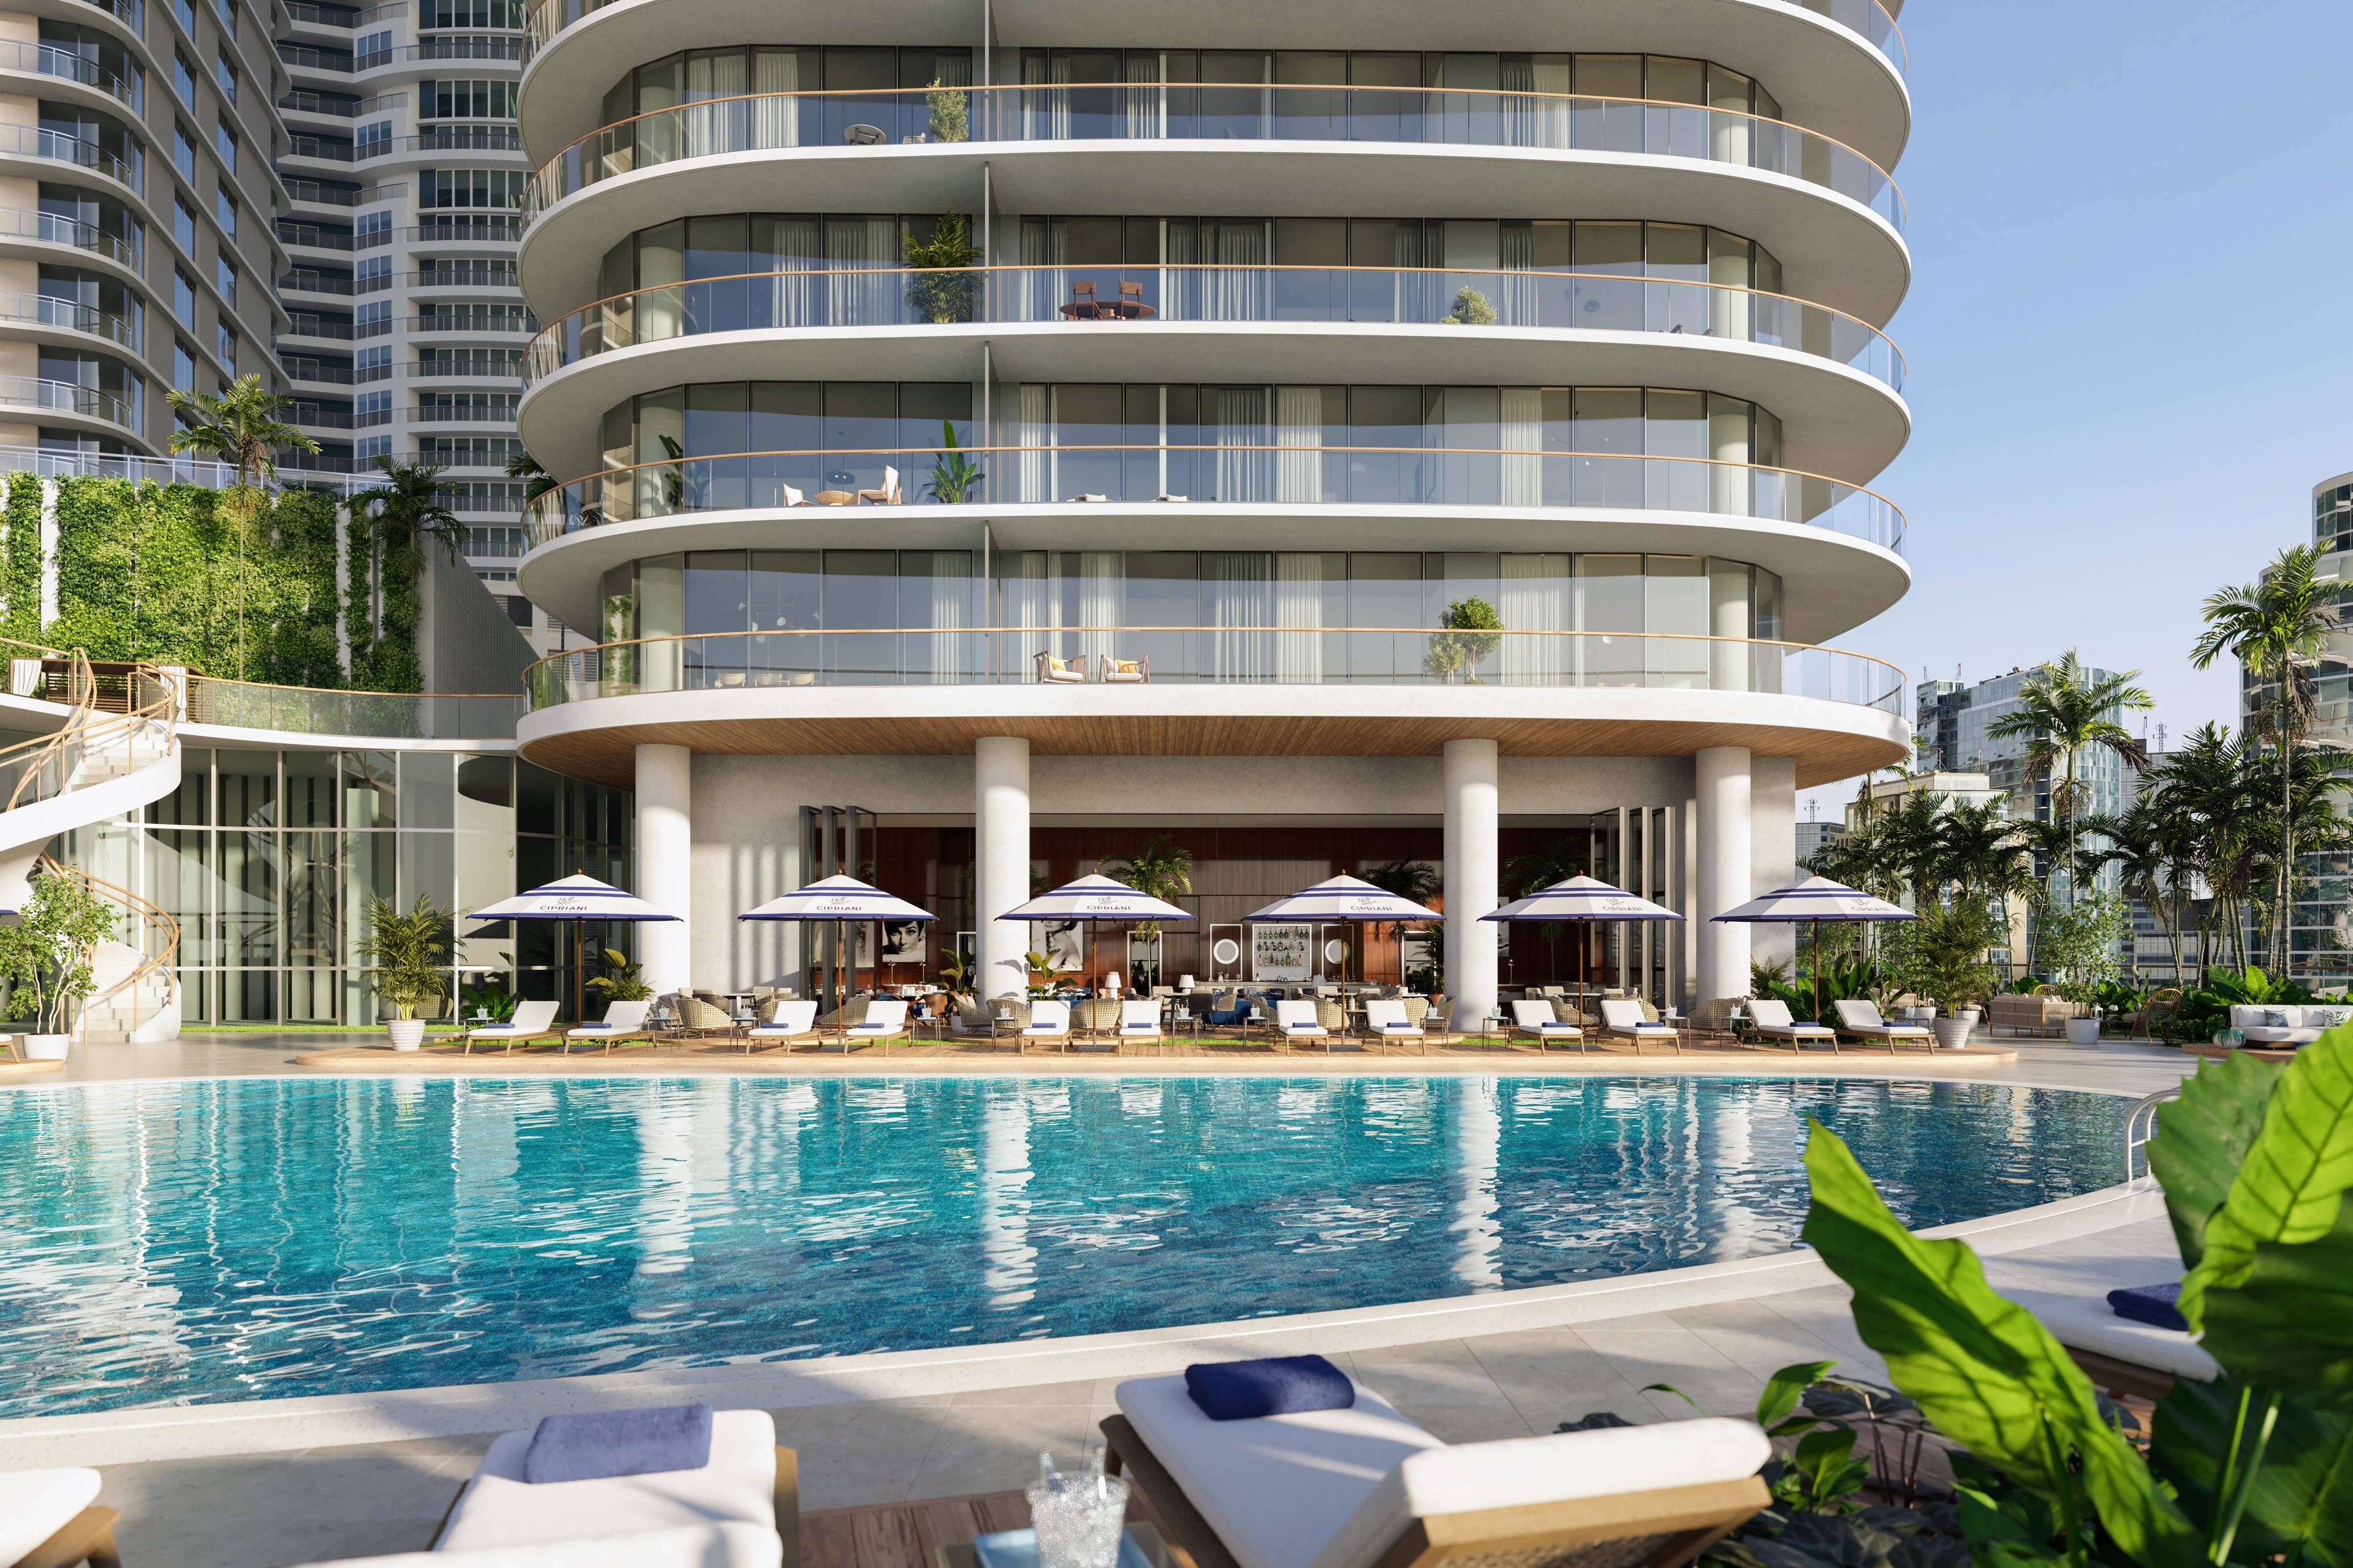 2 Bedrooms + Den 2.5 Baths | Miami's Brickell Centerpiece Tower